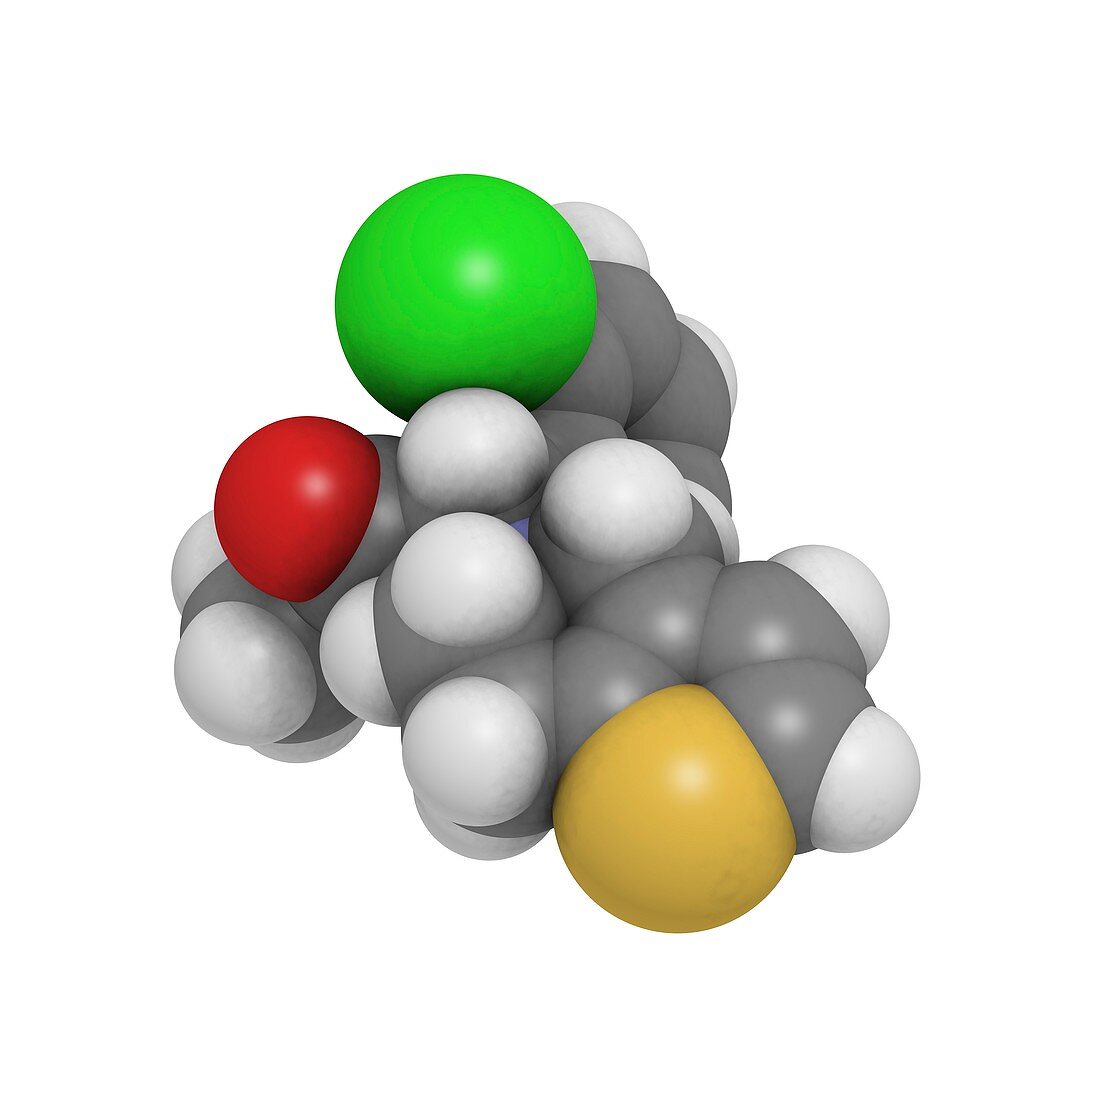 Clopidogrel anti-clotting drug molecule